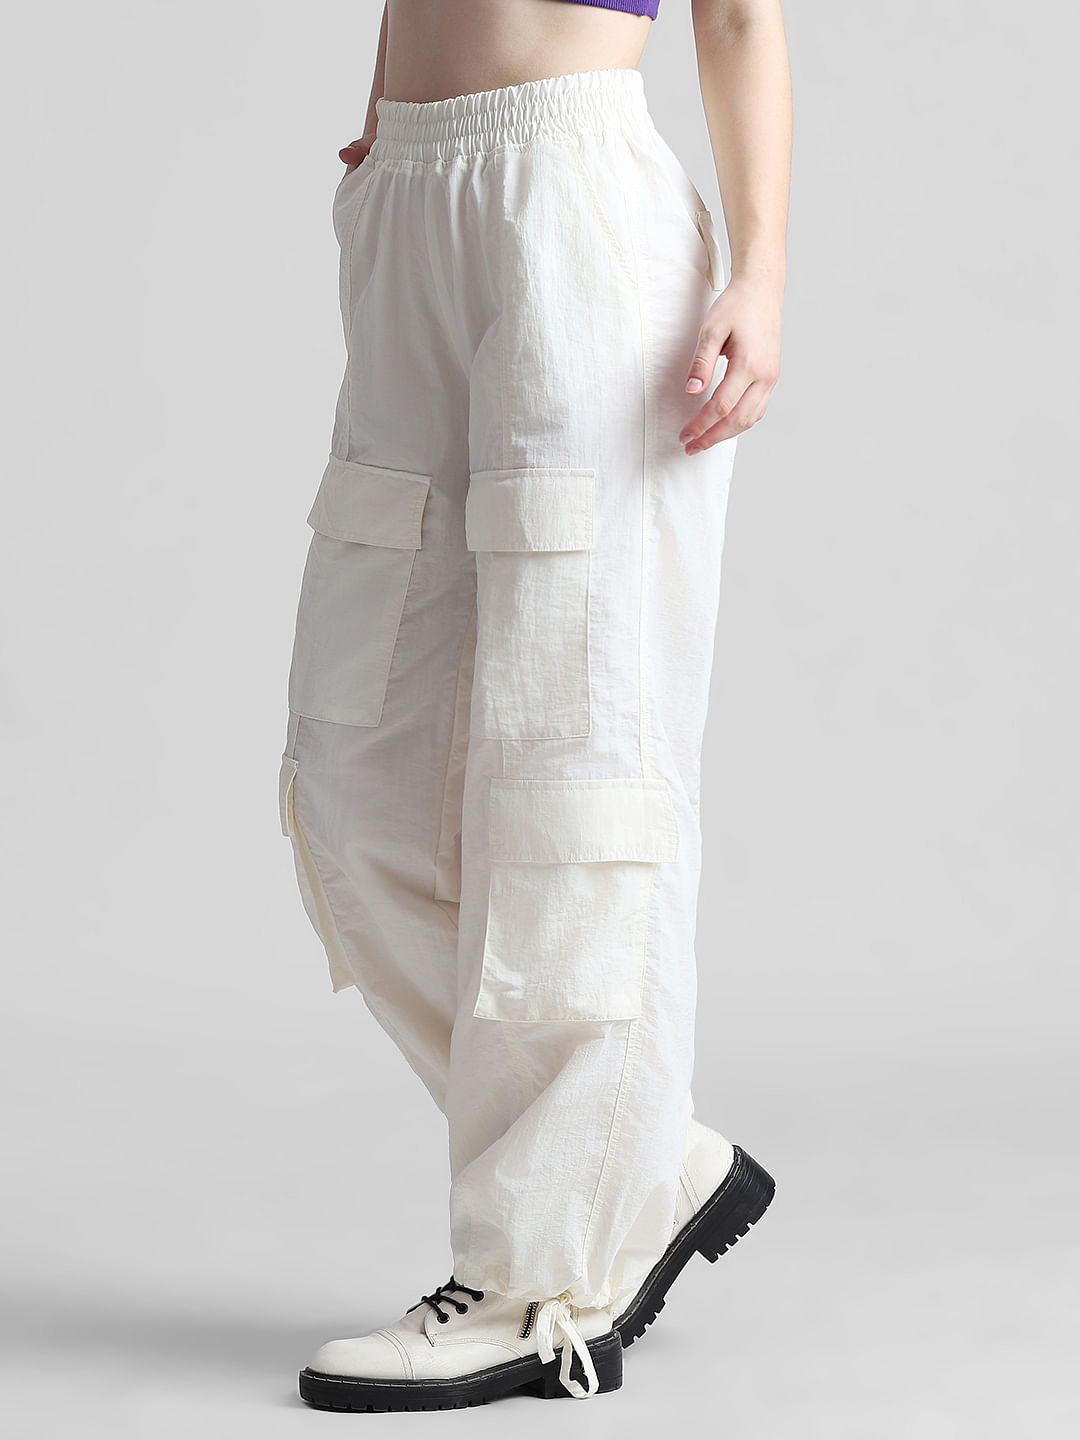 womens white pants | Nordstrom